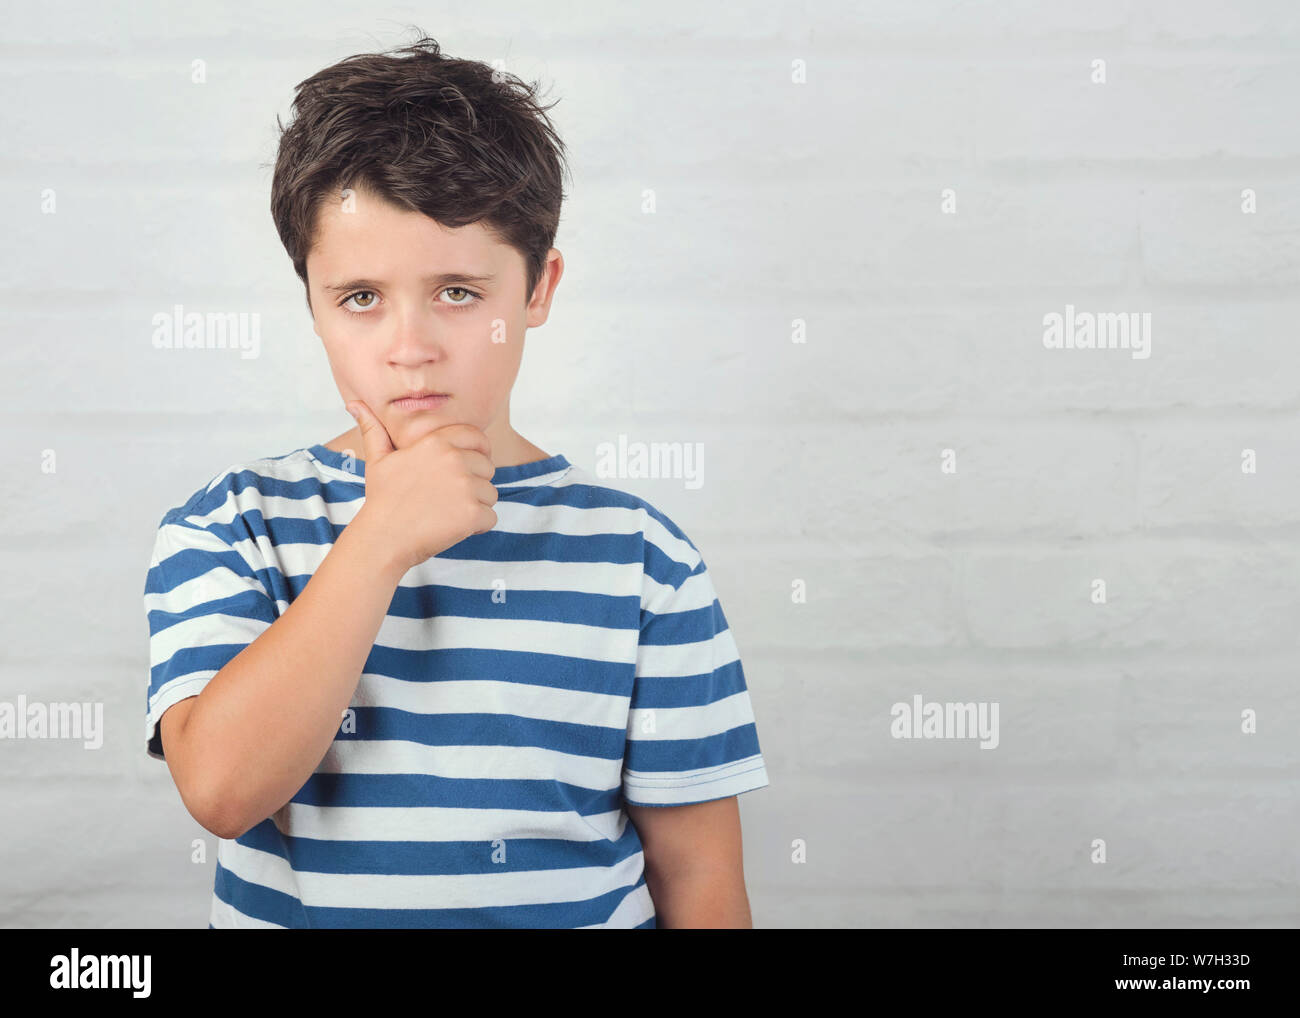 Portrait of serious boy against brick background Stock Photo